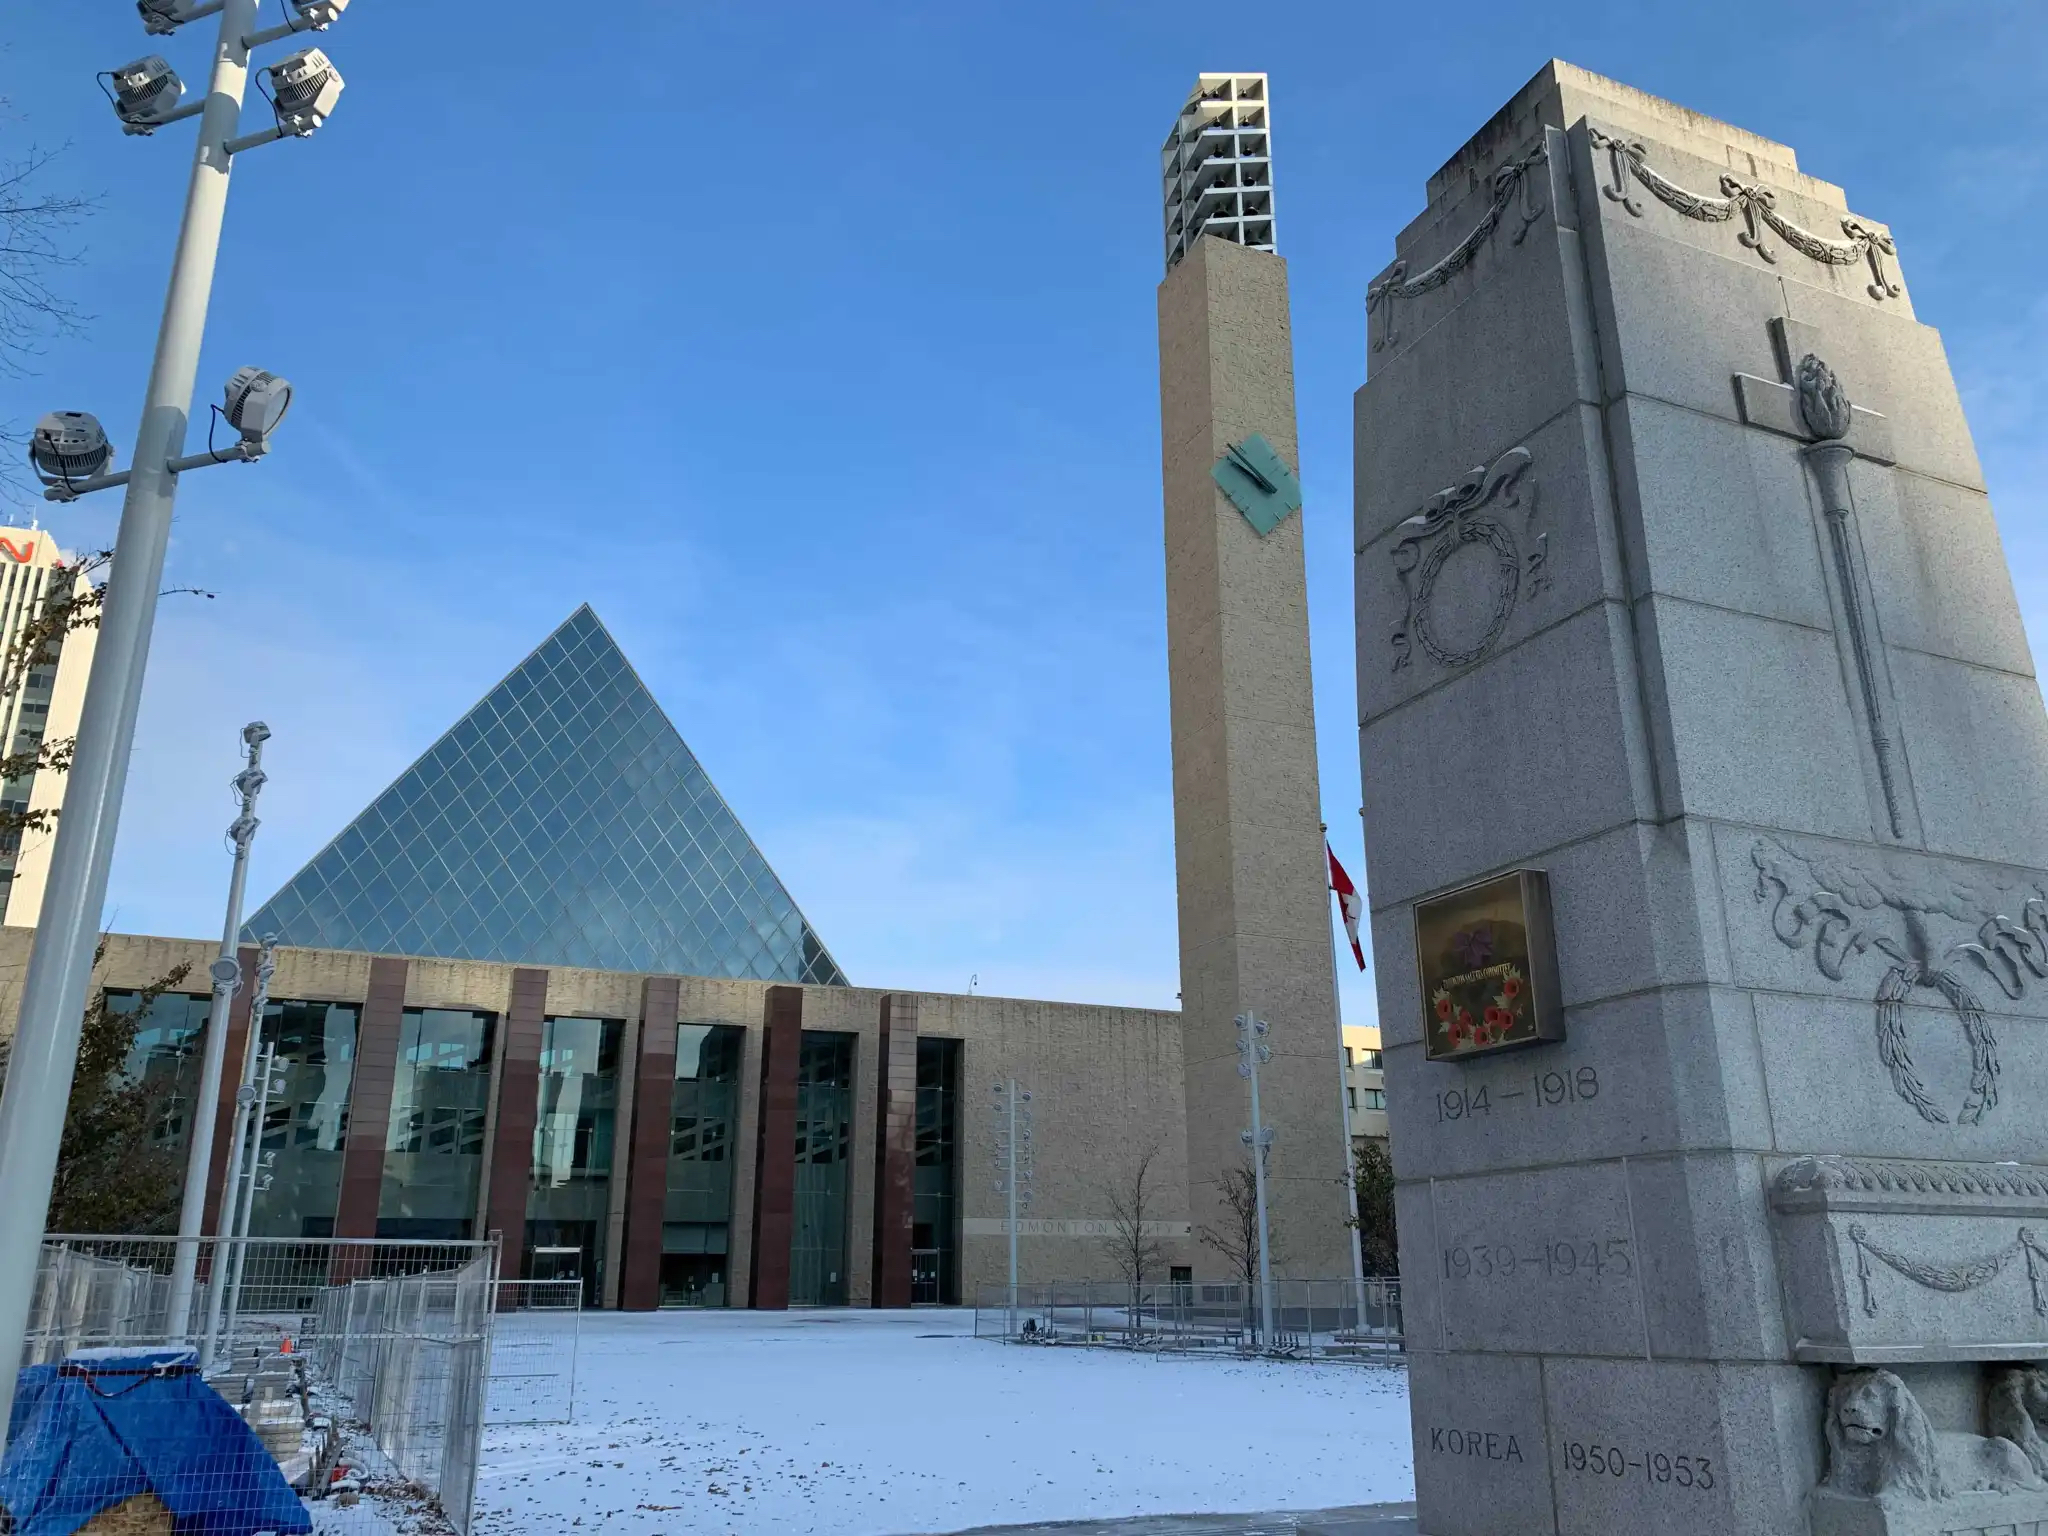 Edmonton City Hall pictured on Tuesday, Oct. 20, 2020. Dean Twardzik, Global News